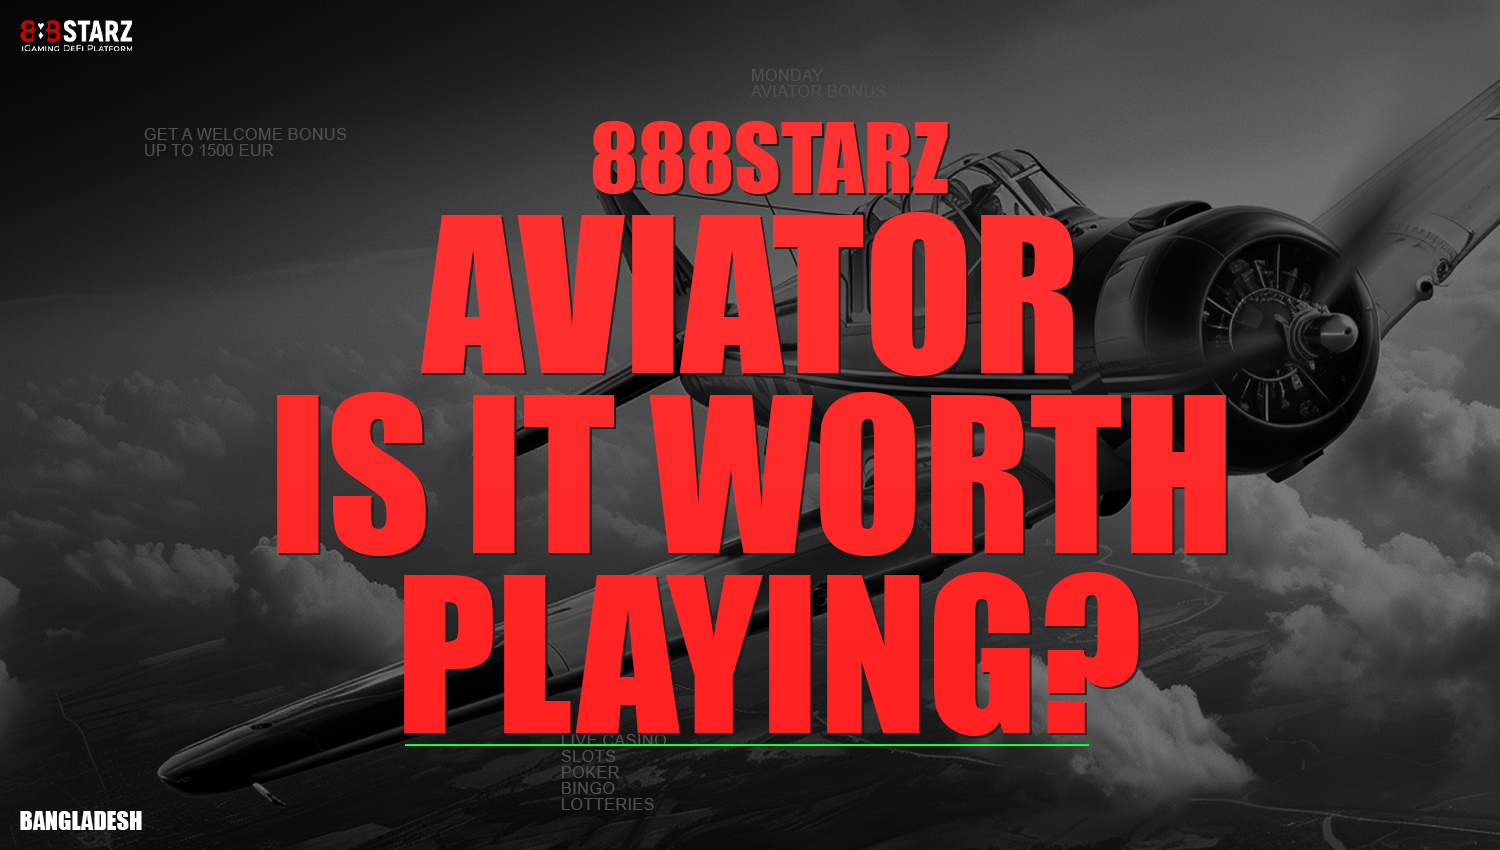 Benefits of playing Aviator at 888starz for Bangladeshi users